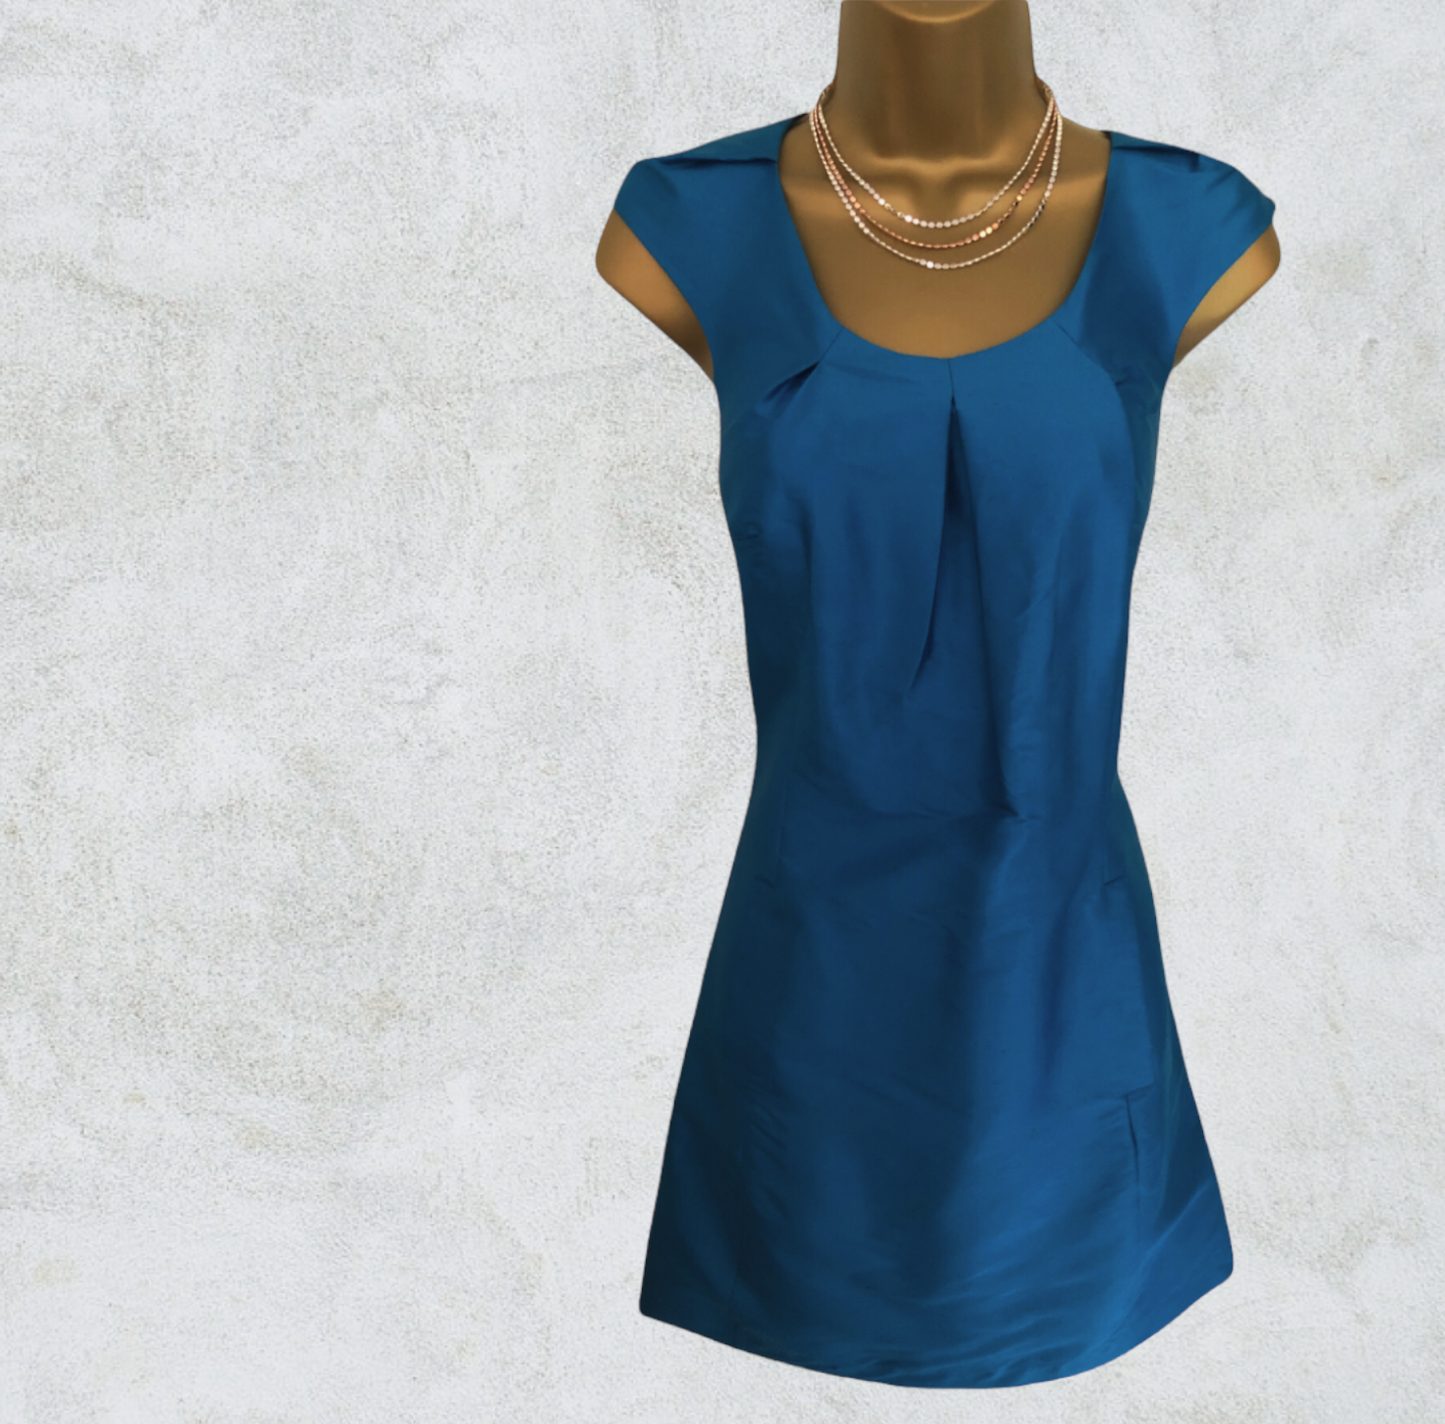 Oasis Turquoise Silk Mini Dress UK 10 US 6 EU 38 BNWT RRP £75 Timeless Fashions